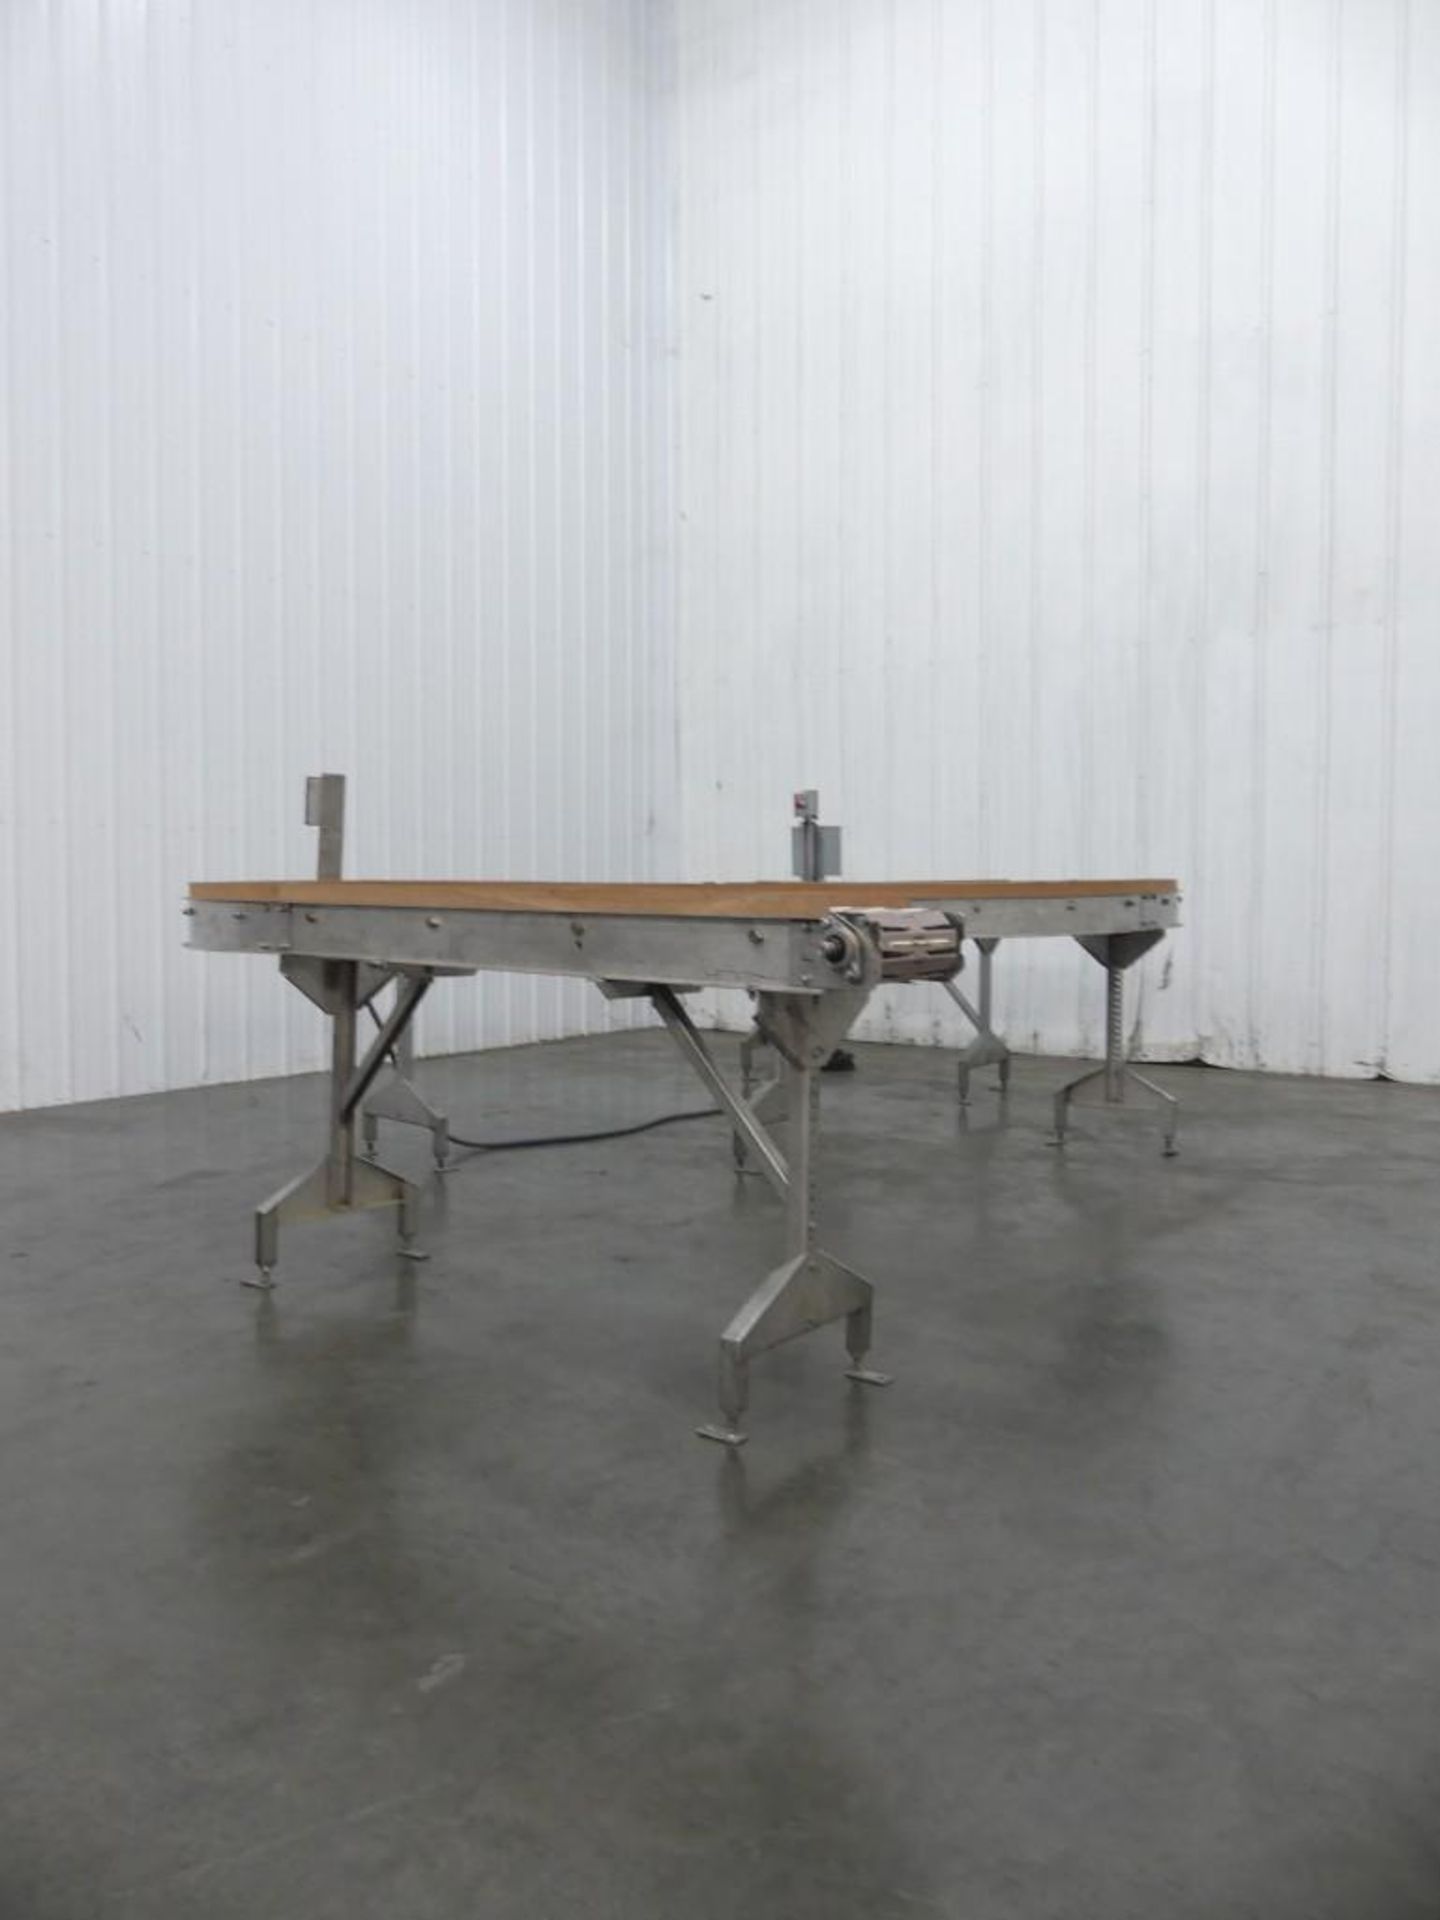 Serpentine Table-Top Conveyor 10" Wide x 32' Long - Image 5 of 23